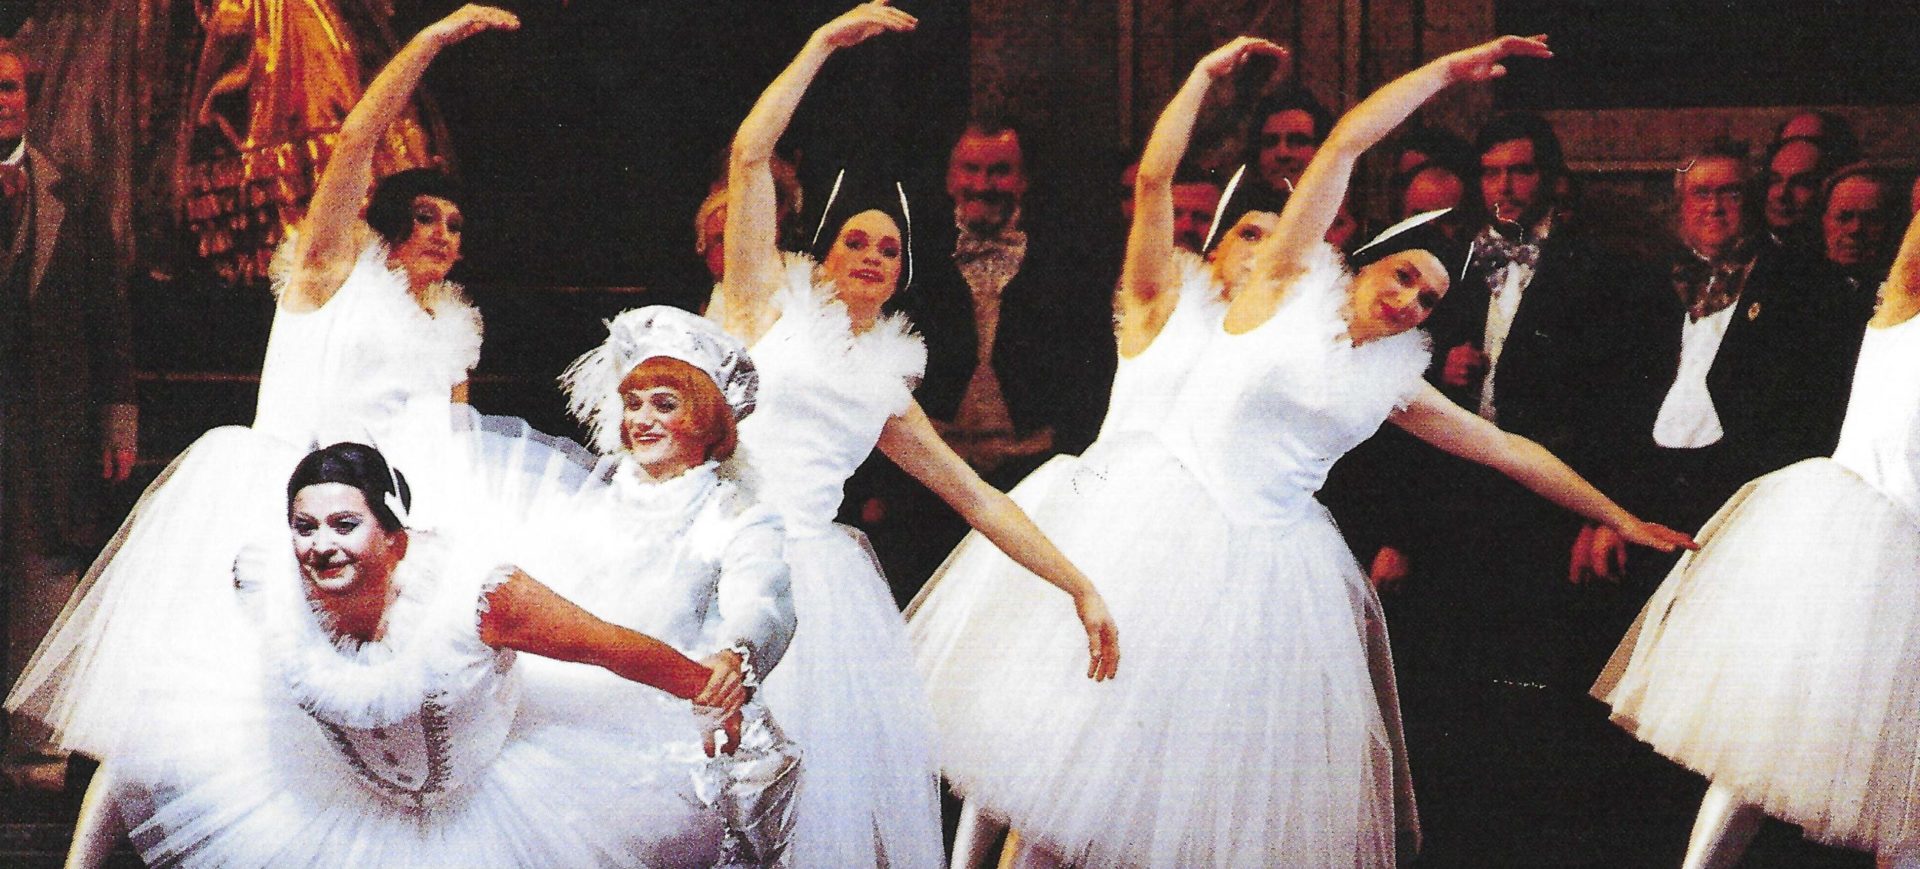 Domols - Divertissementchen 1992 - Ballett tanzt